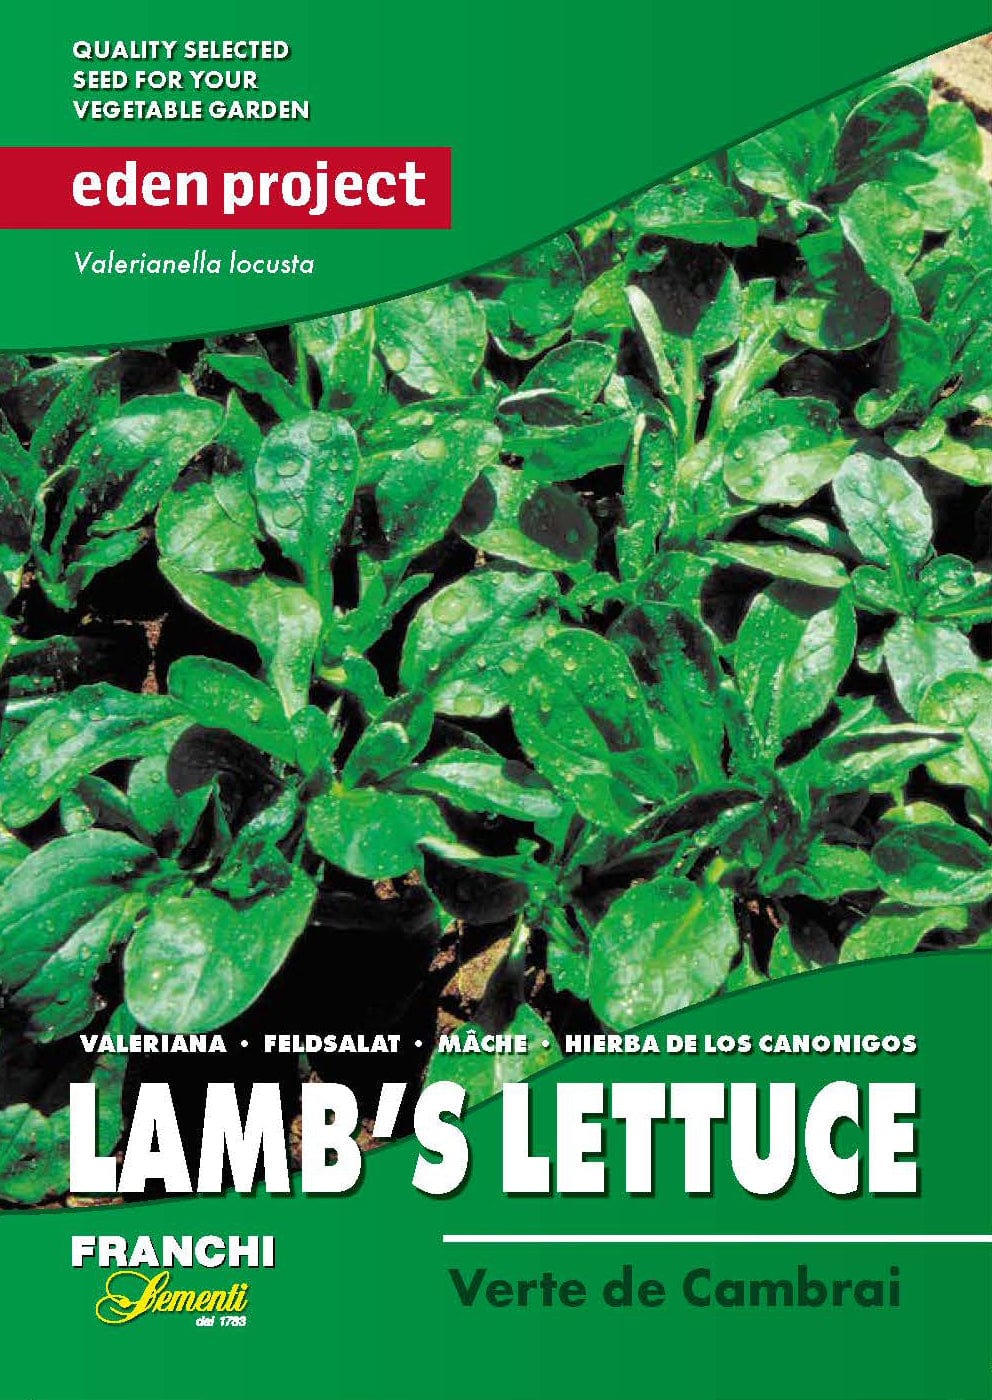 Eden lamb's lettuce cambrai seeds